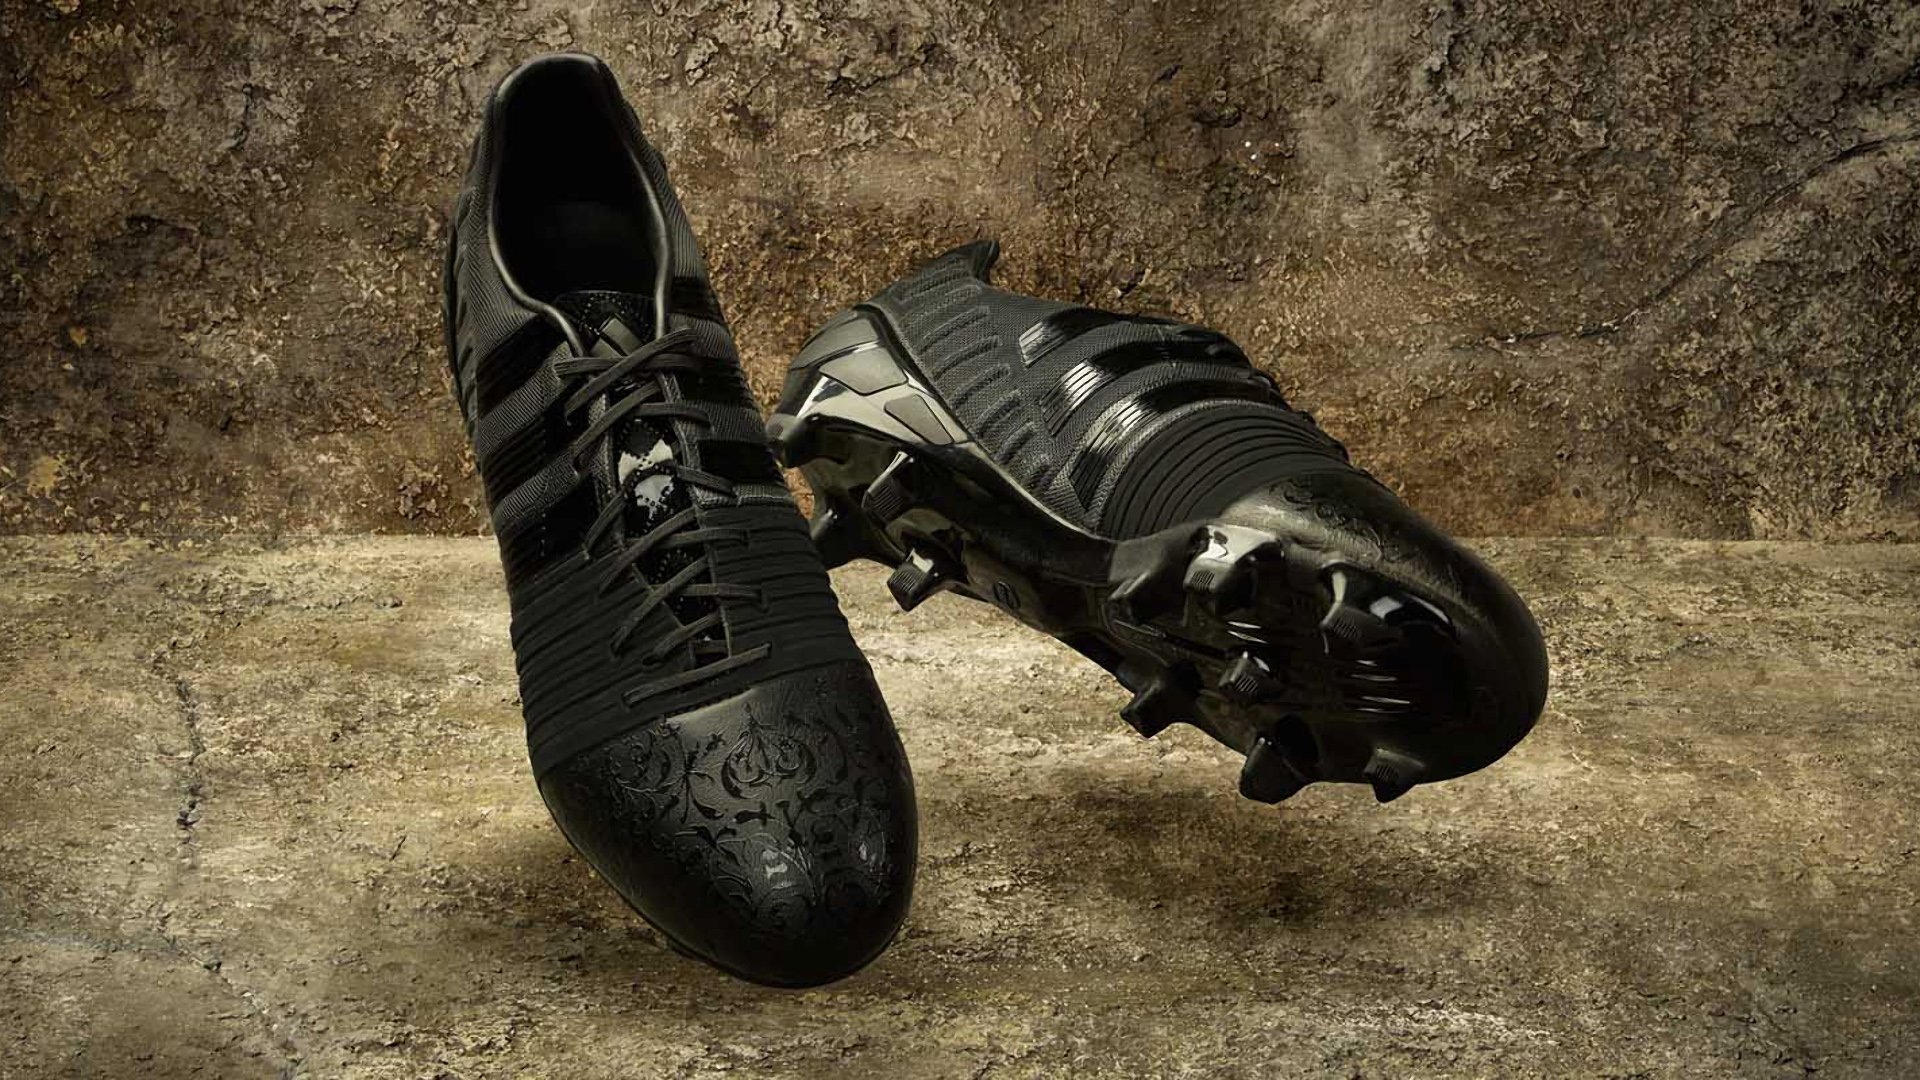 Adidas Nitrocharge Black Pack Football Boots Wallpaper Black Pack Football Boots